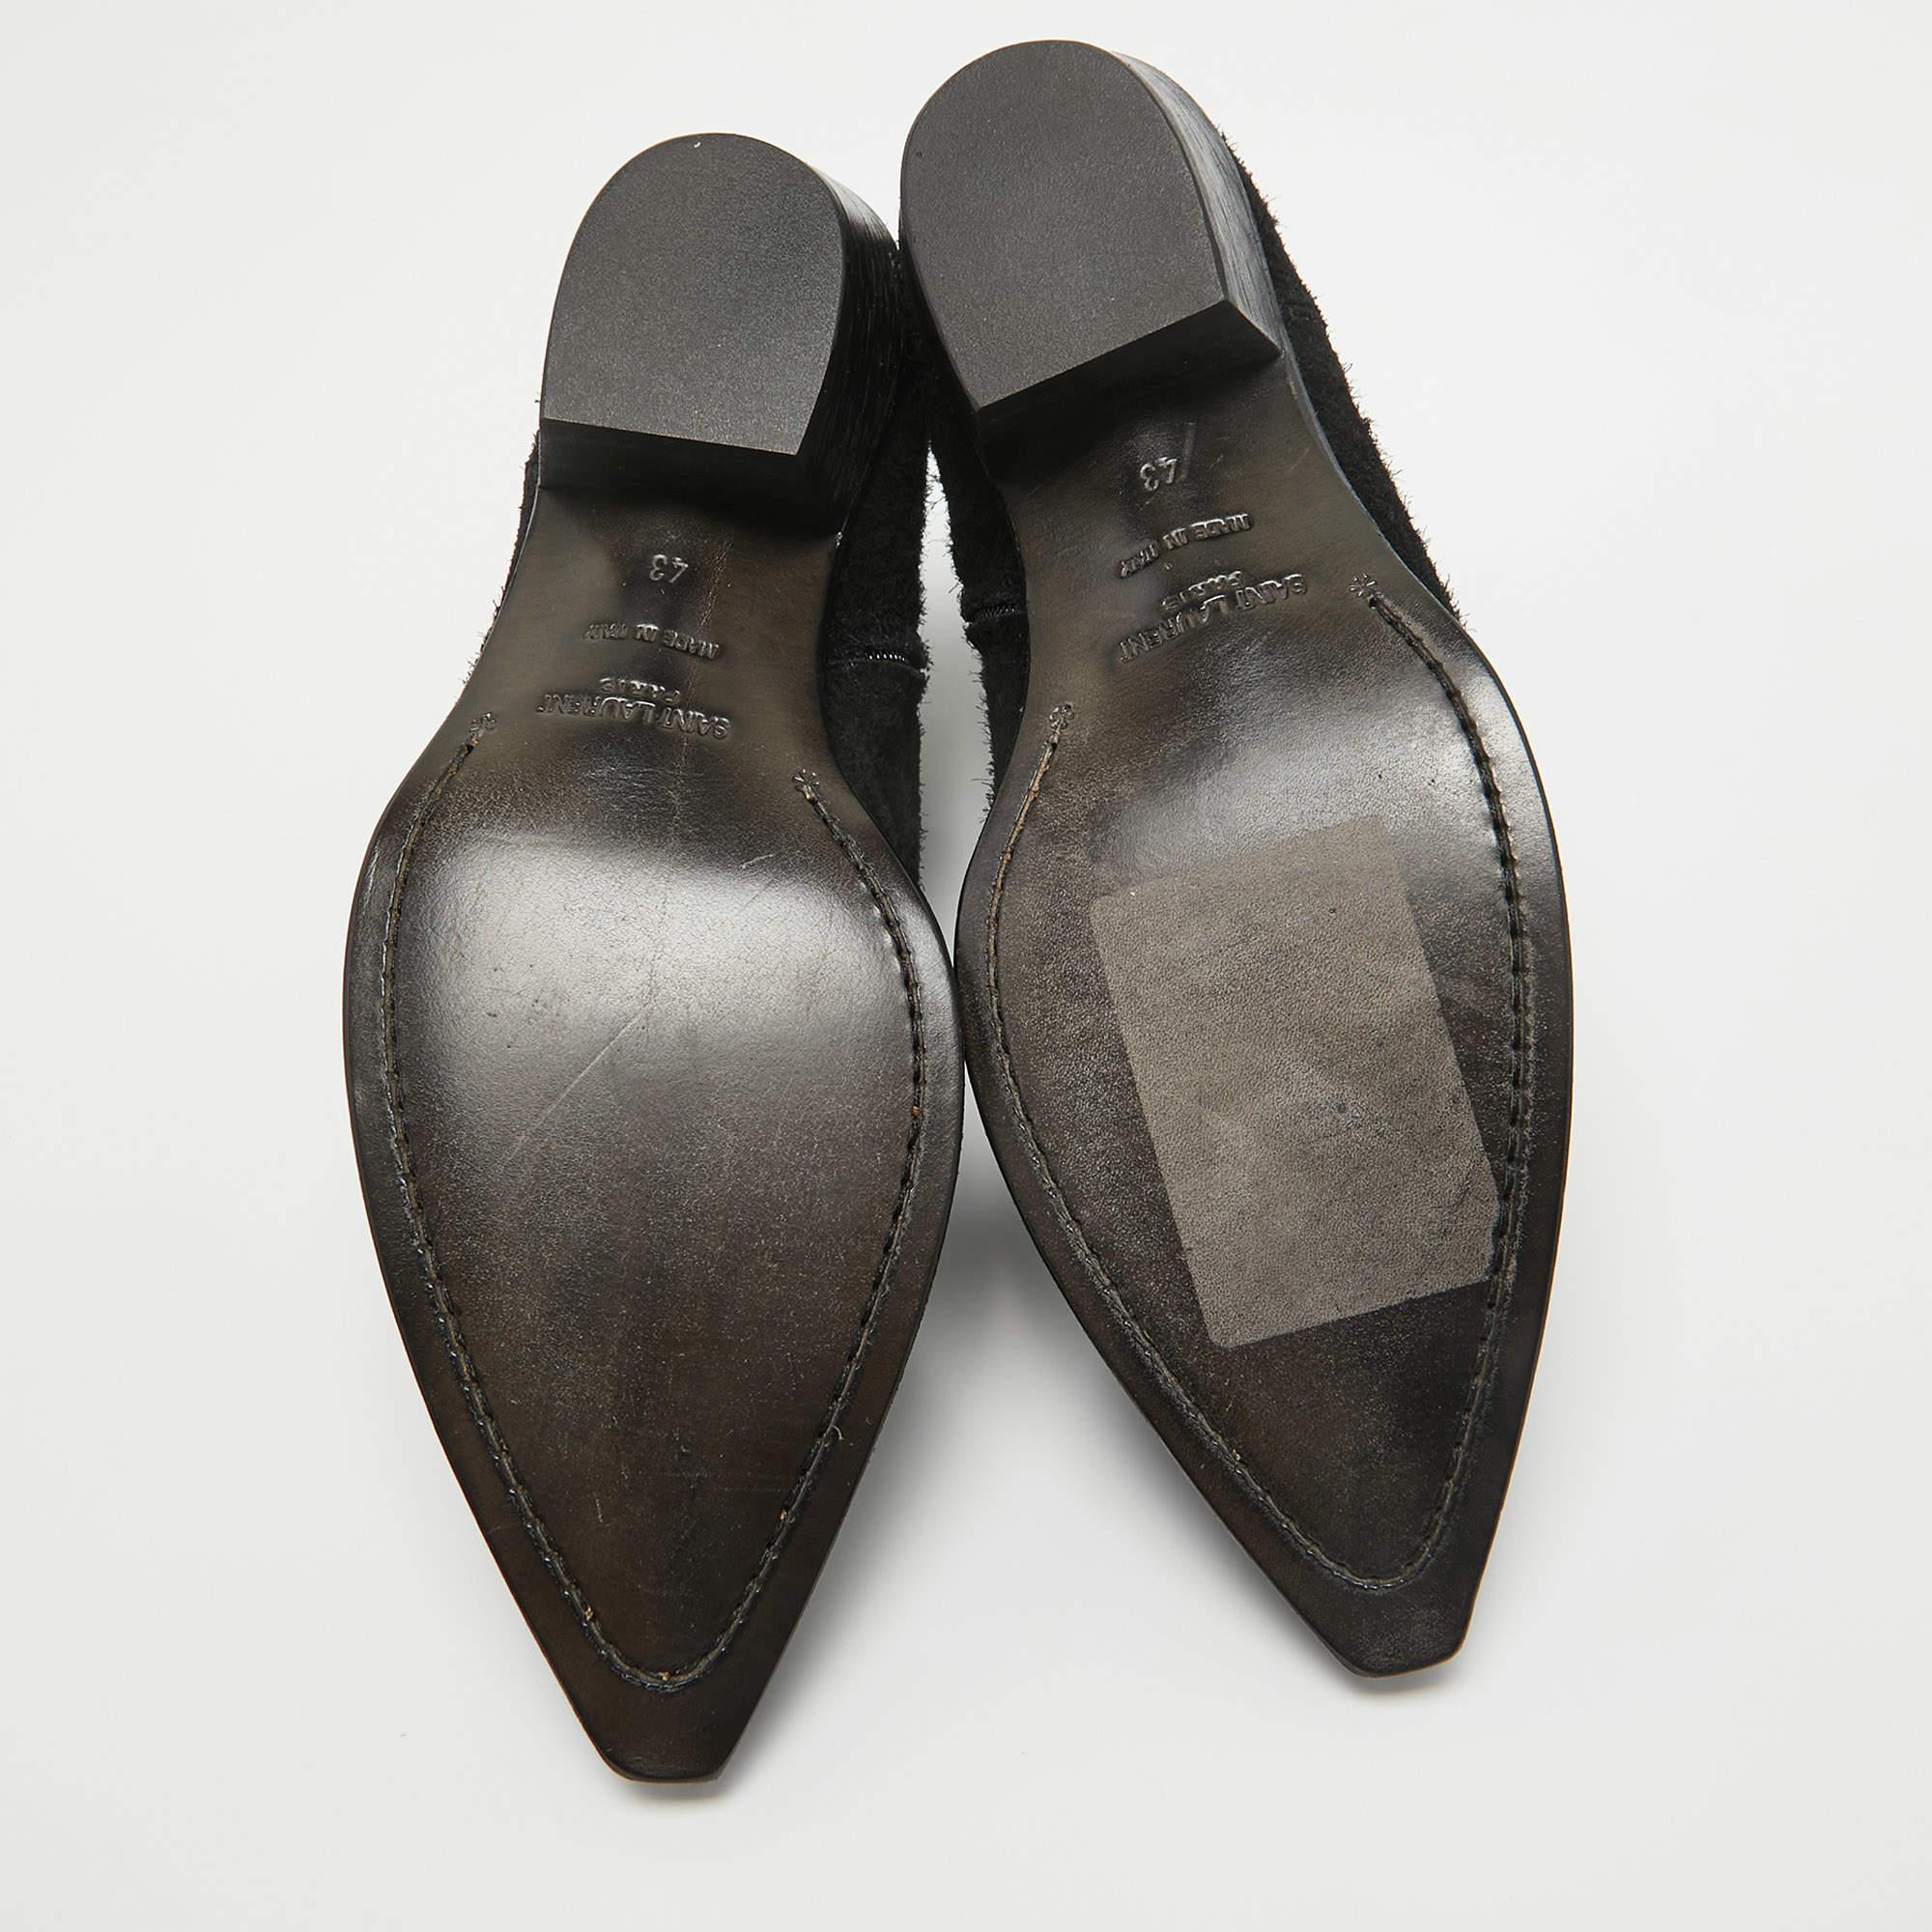 Saint Laurent Black Leather Pointed Toe Boots Size 43 2